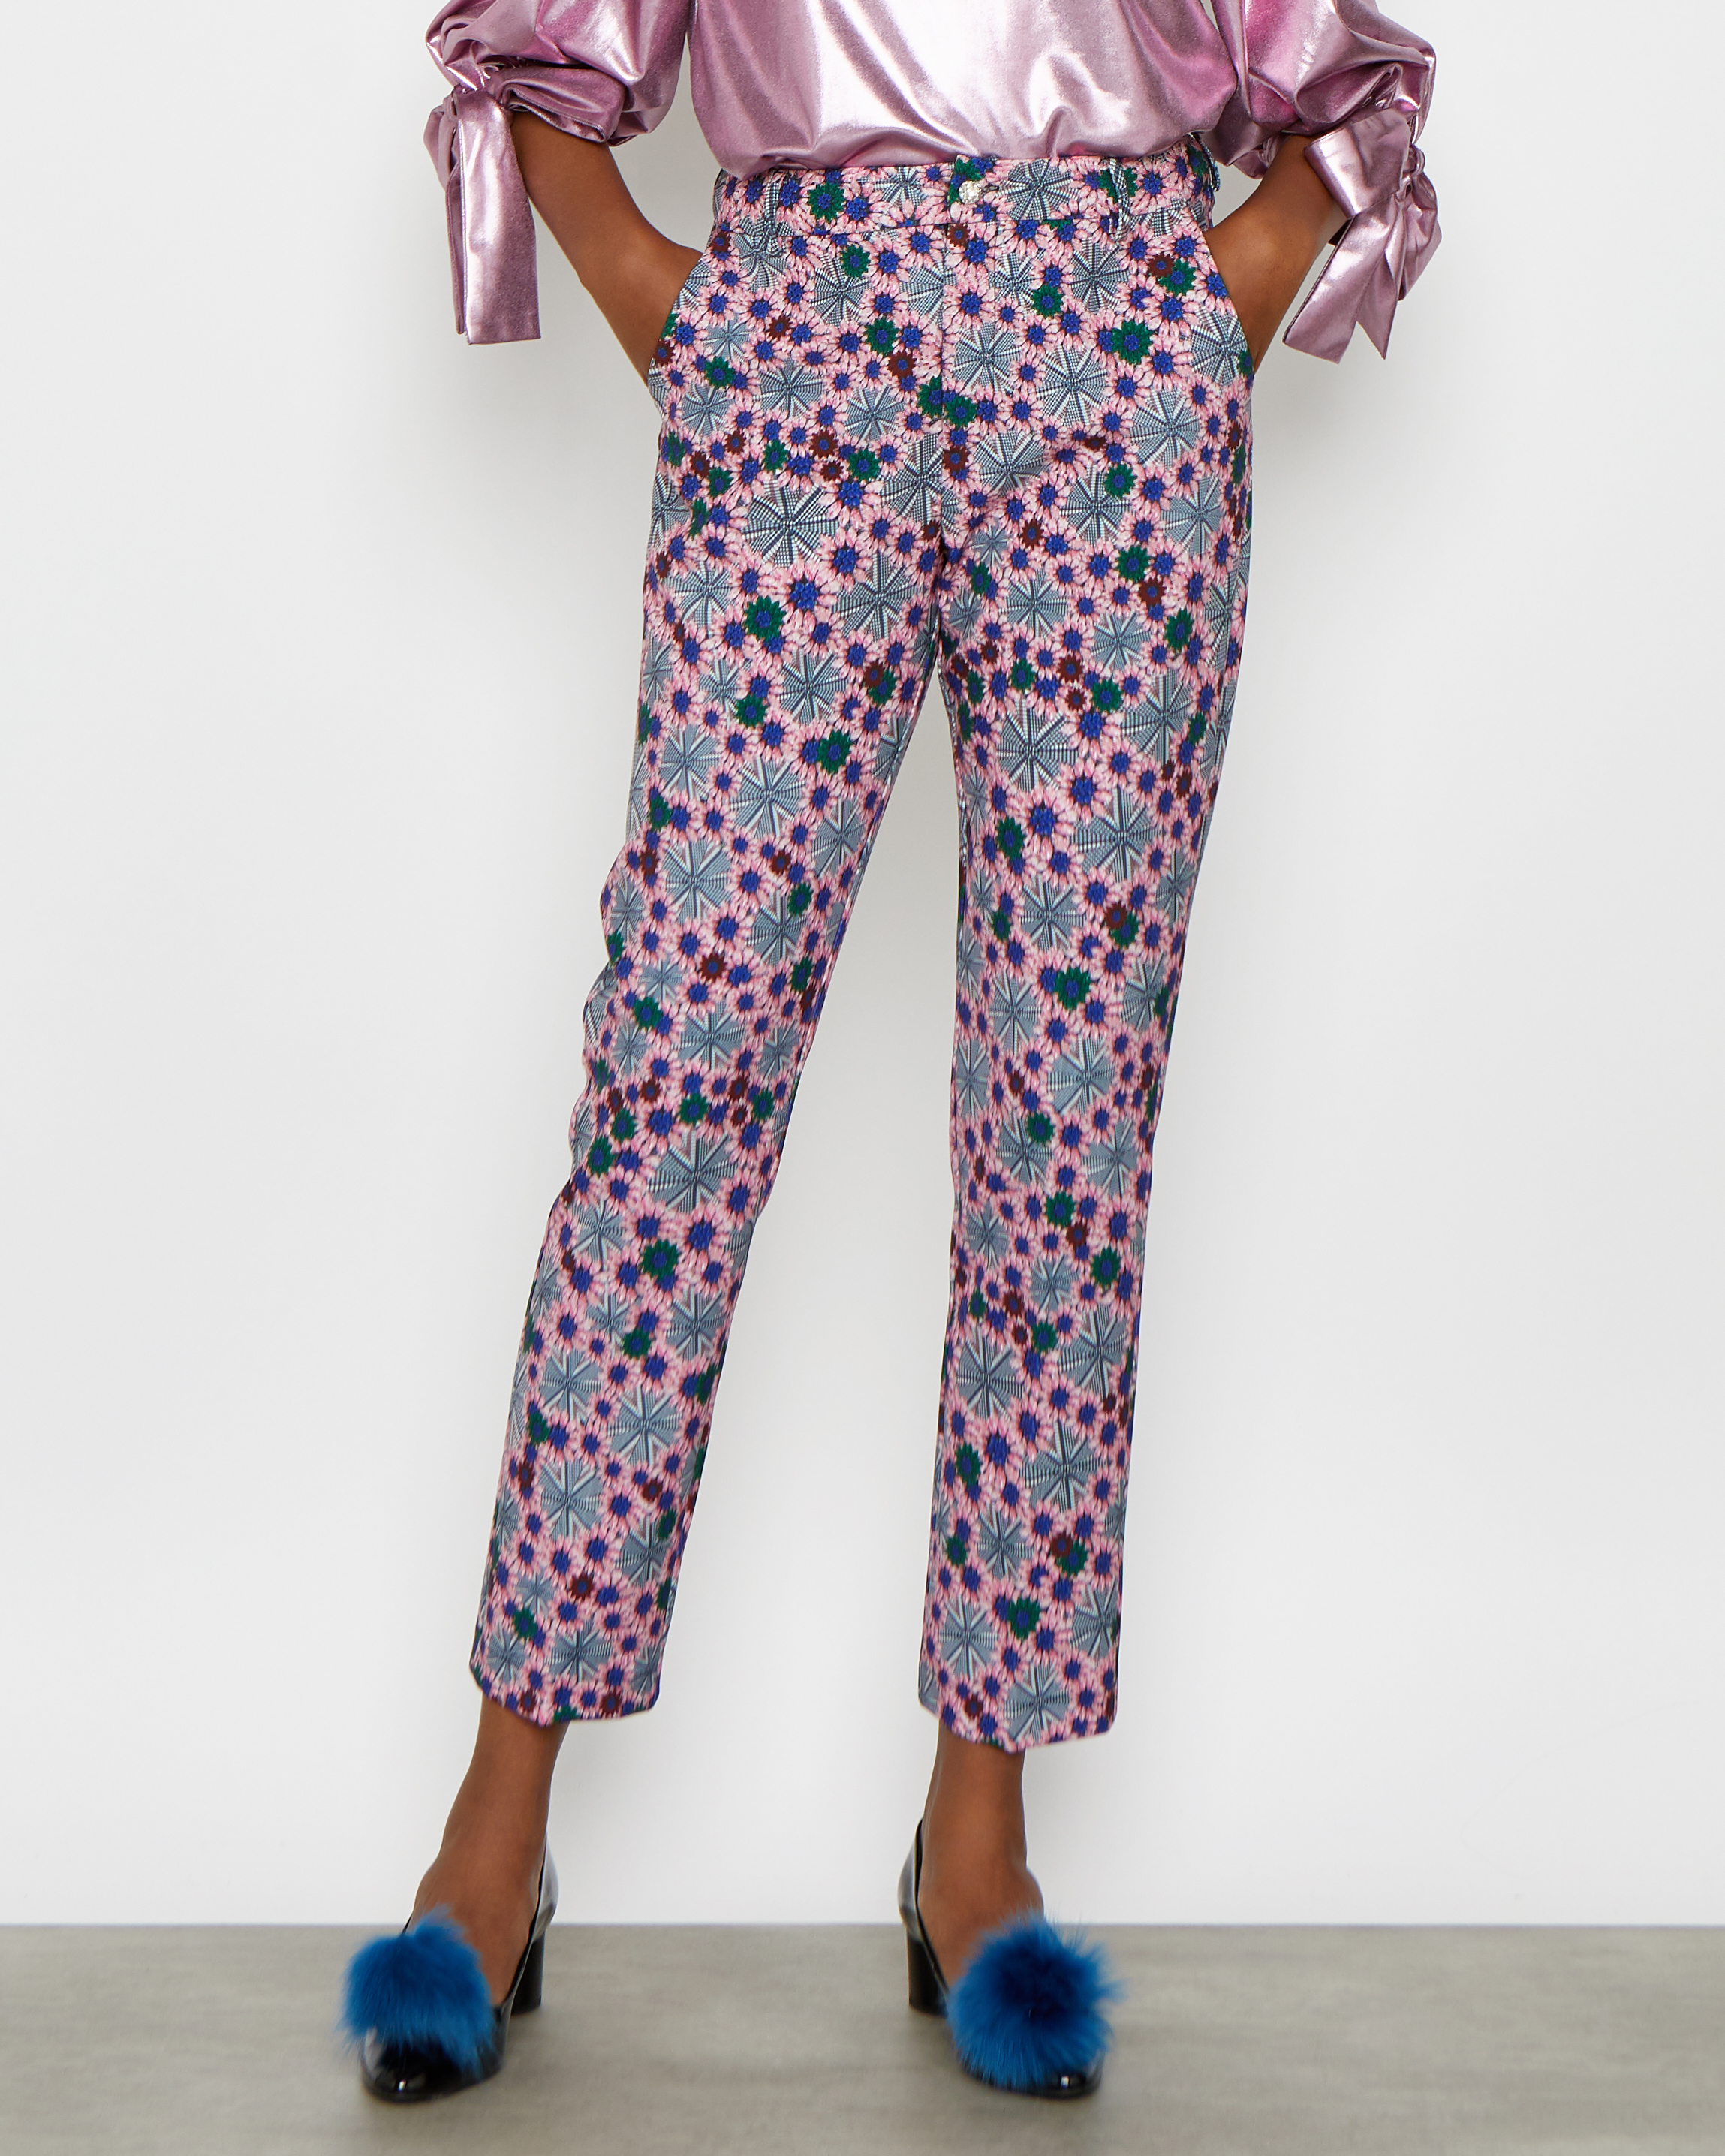 Dunnes Stores | Multi Joanne Hynes Kaleidoscope Print Trousers2298 x 2872